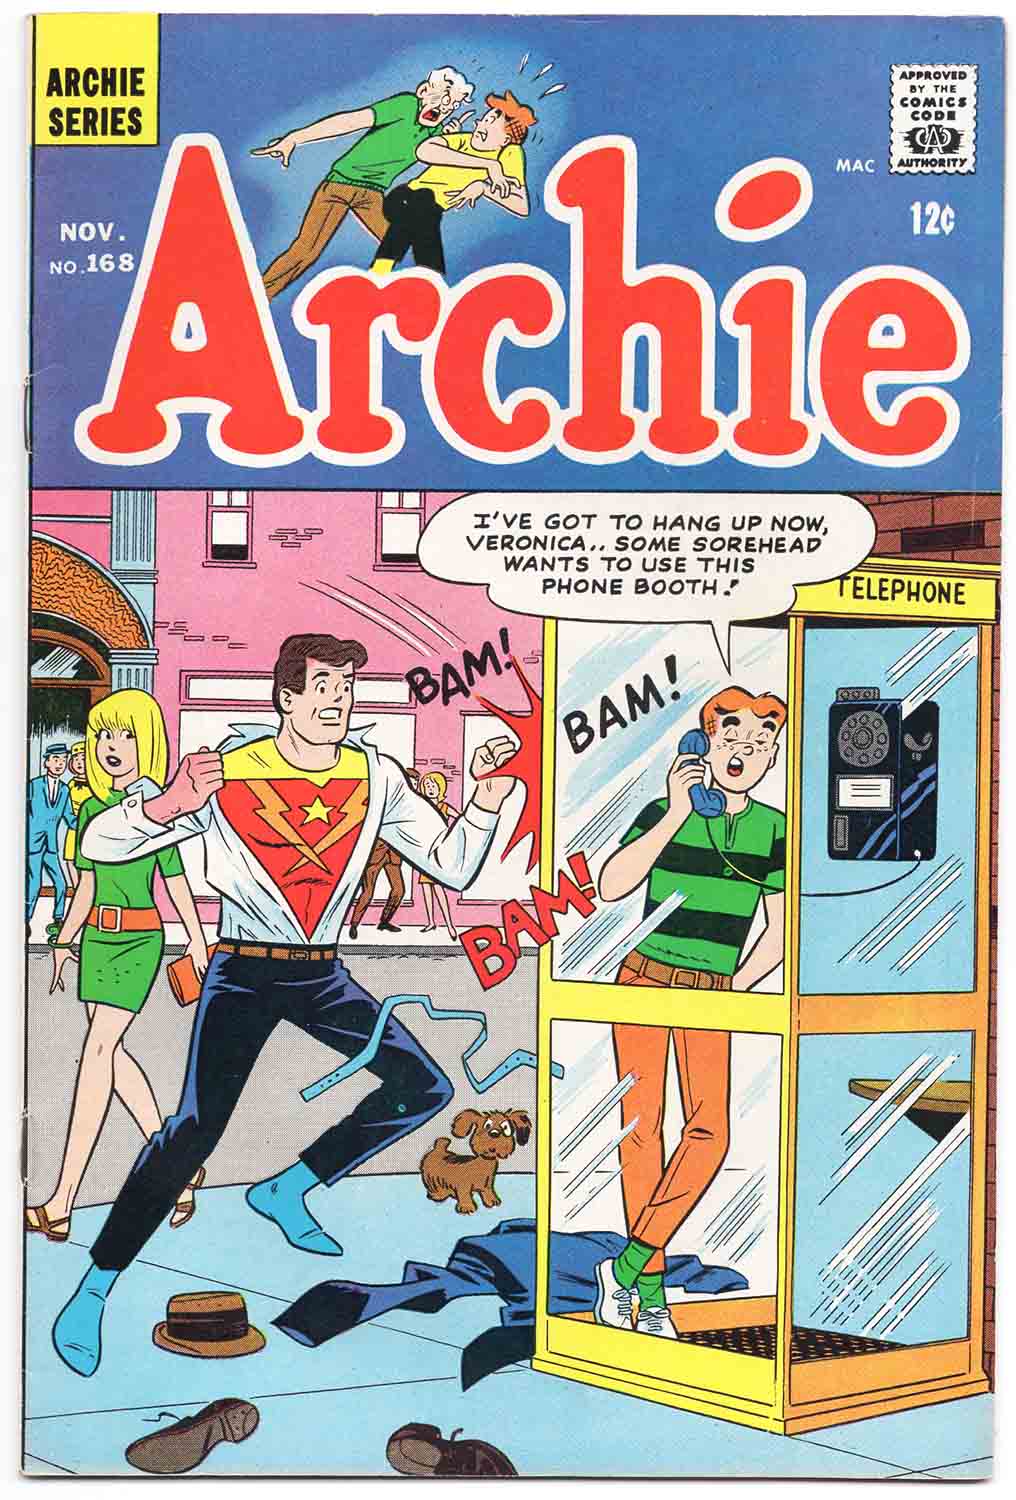 Archie #168